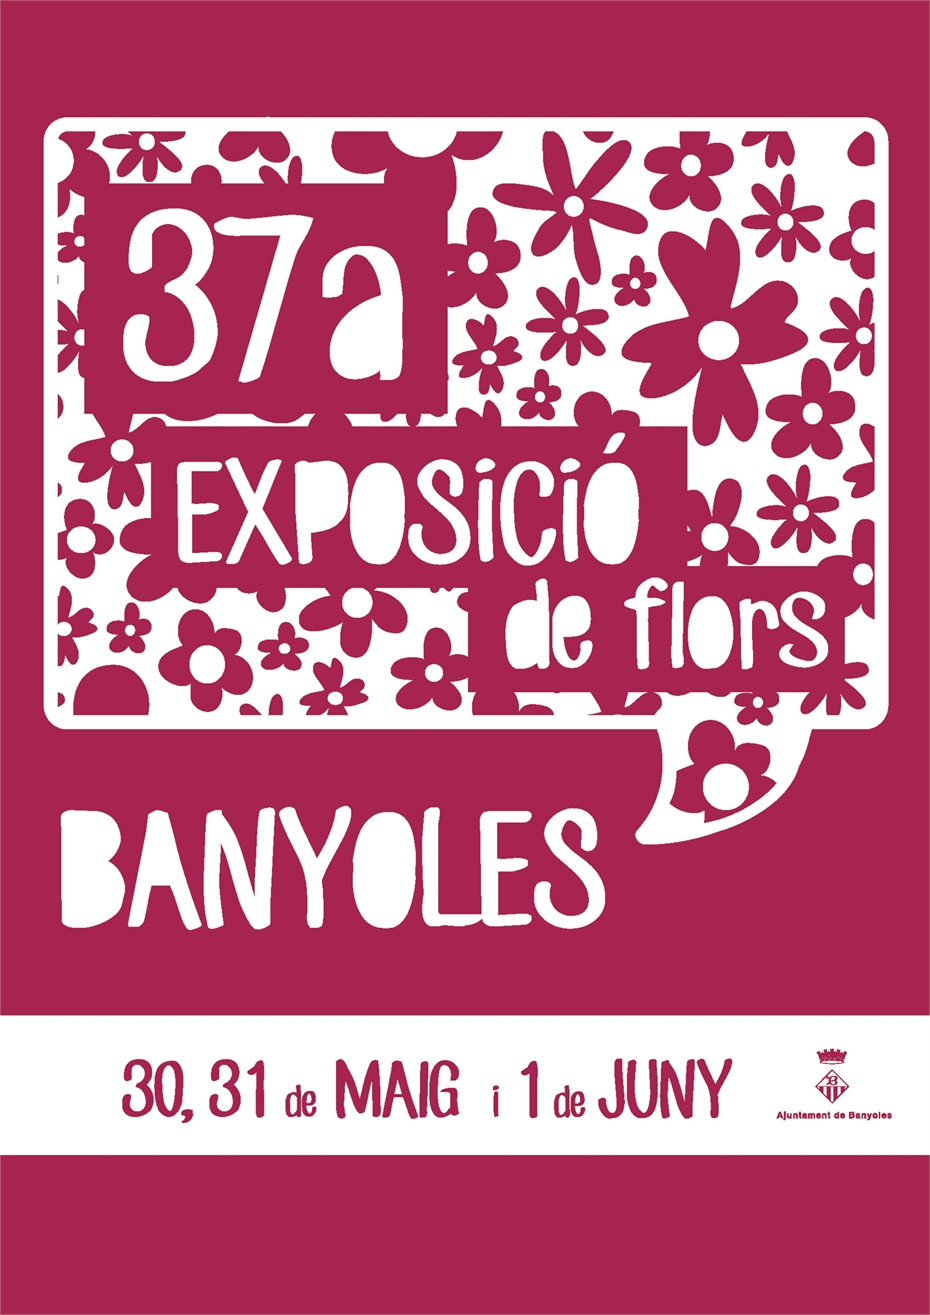 cartell exposicio de flors de Banyoles(1).jpg - 448.45 KB